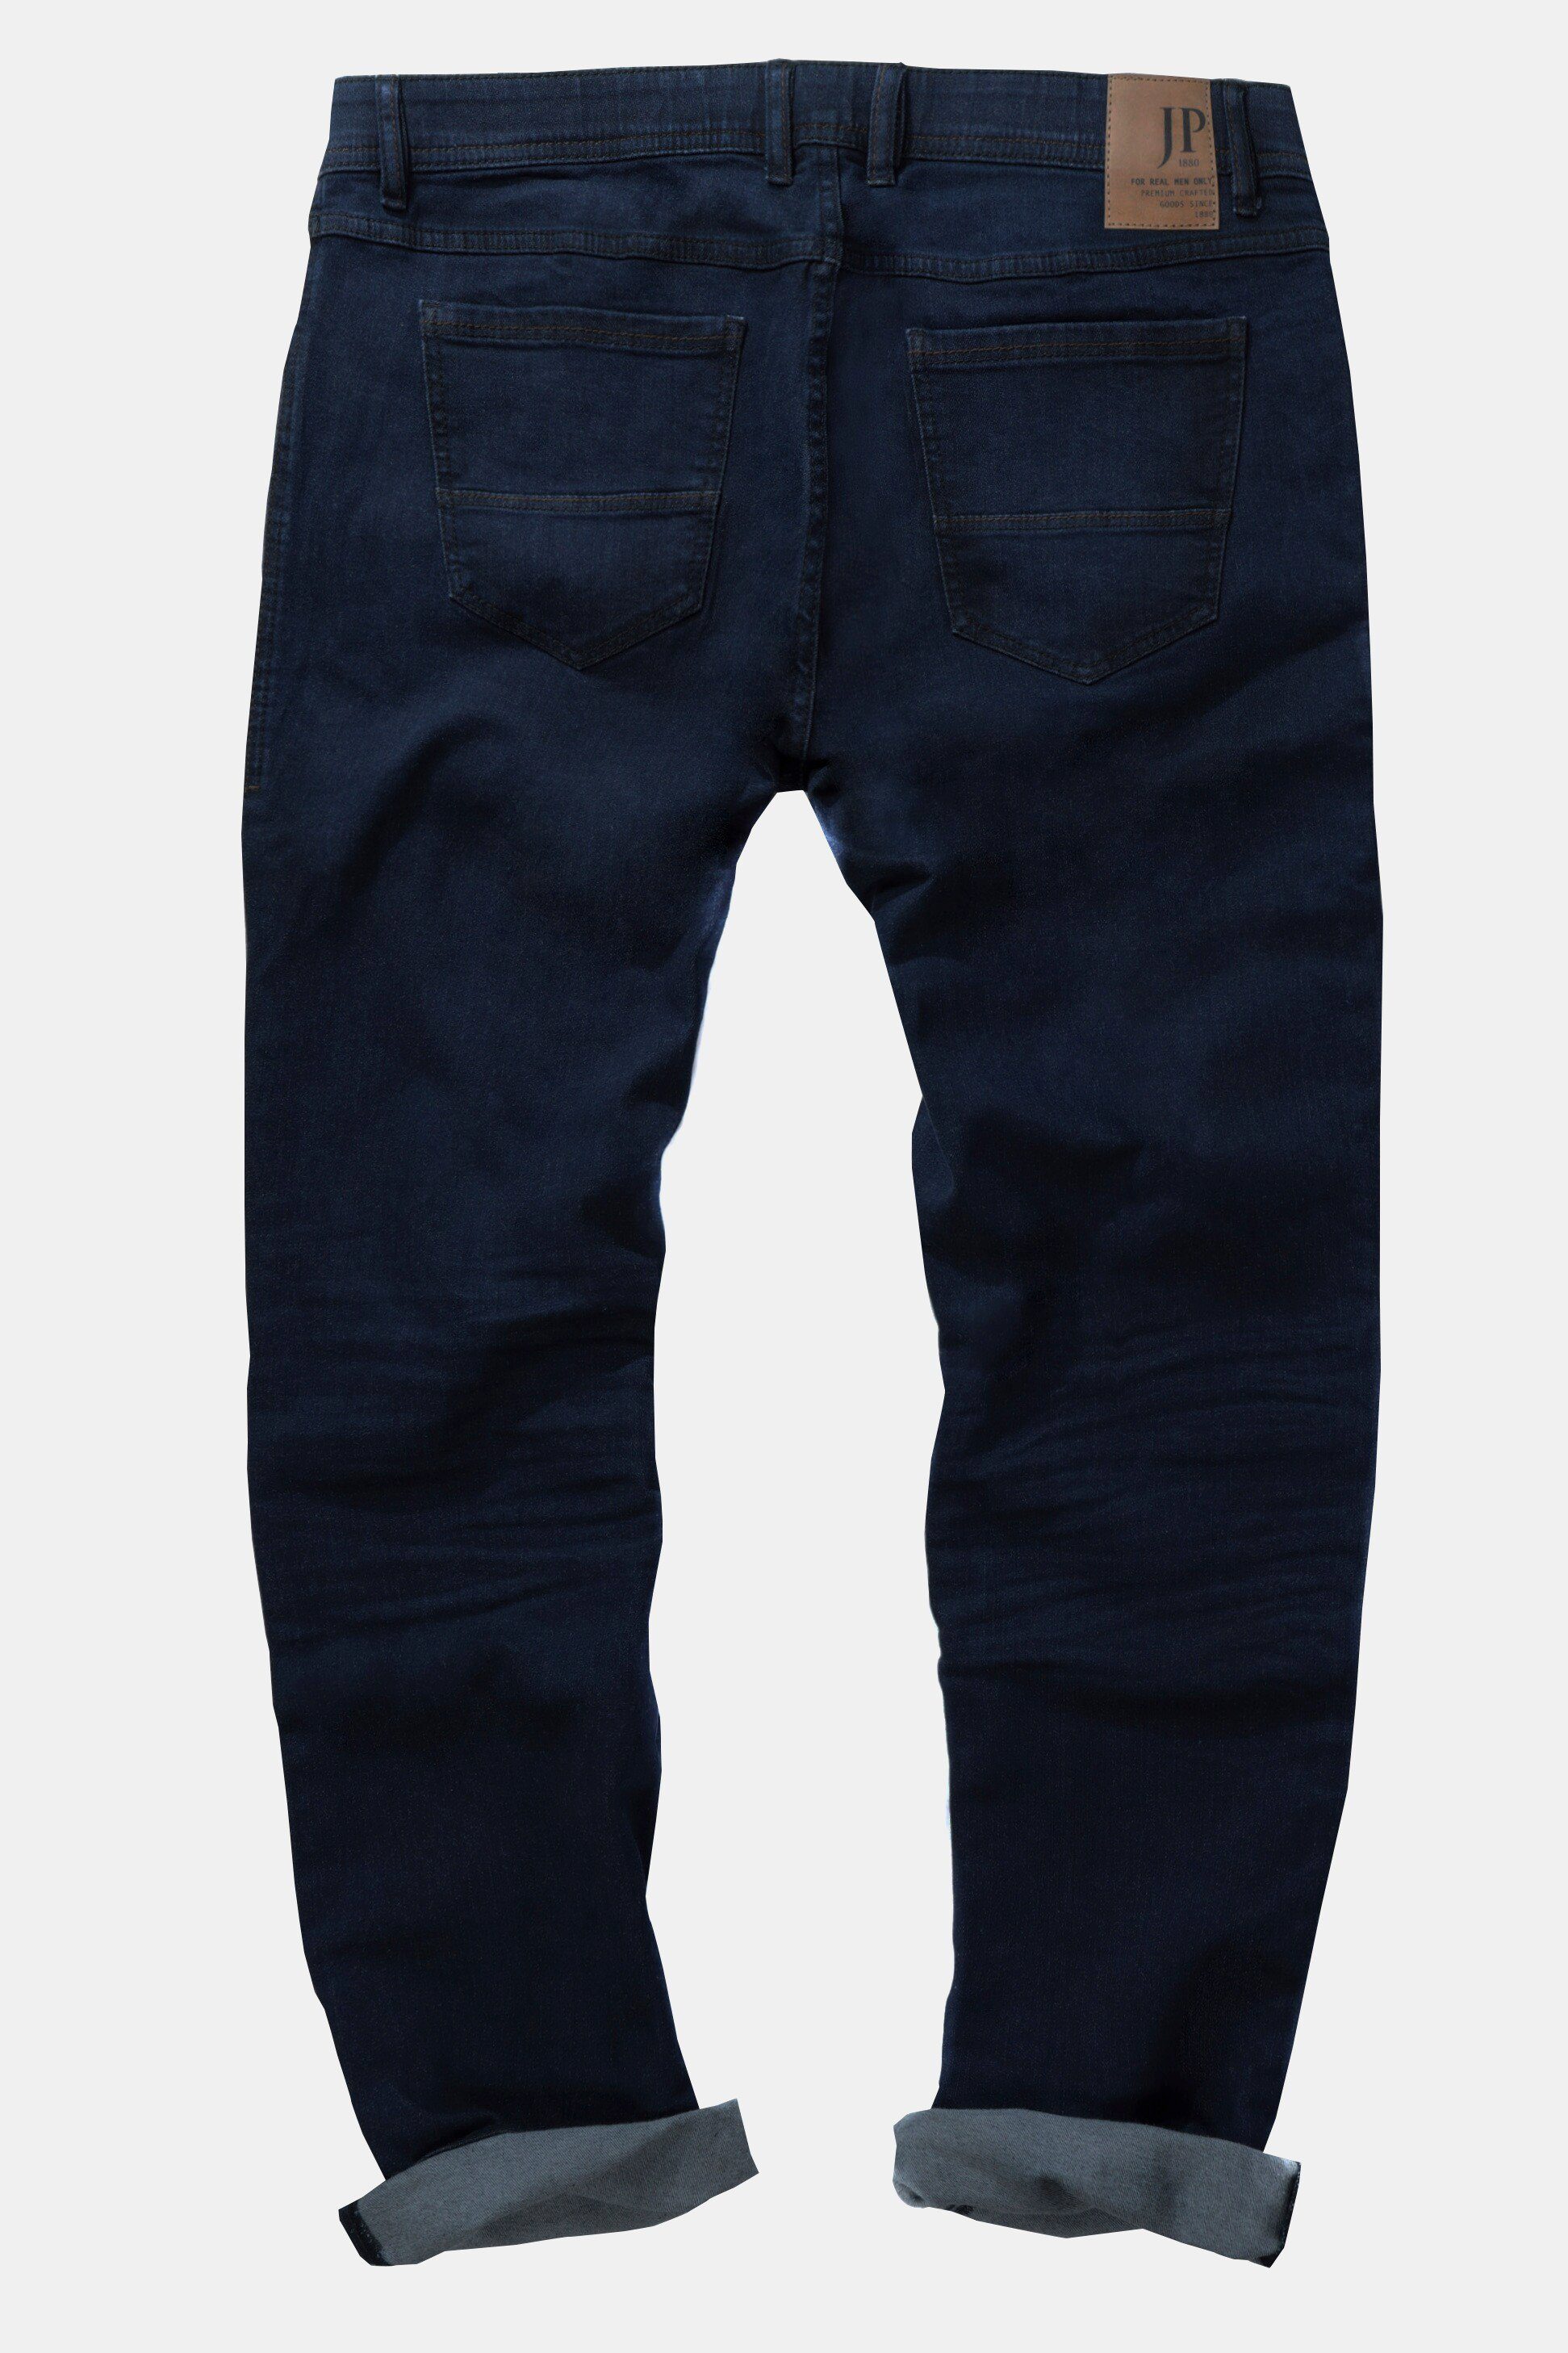 Cargohose JP1880 Bauchfit Jeans dark blue Denim 70/35 bis denim Gr.